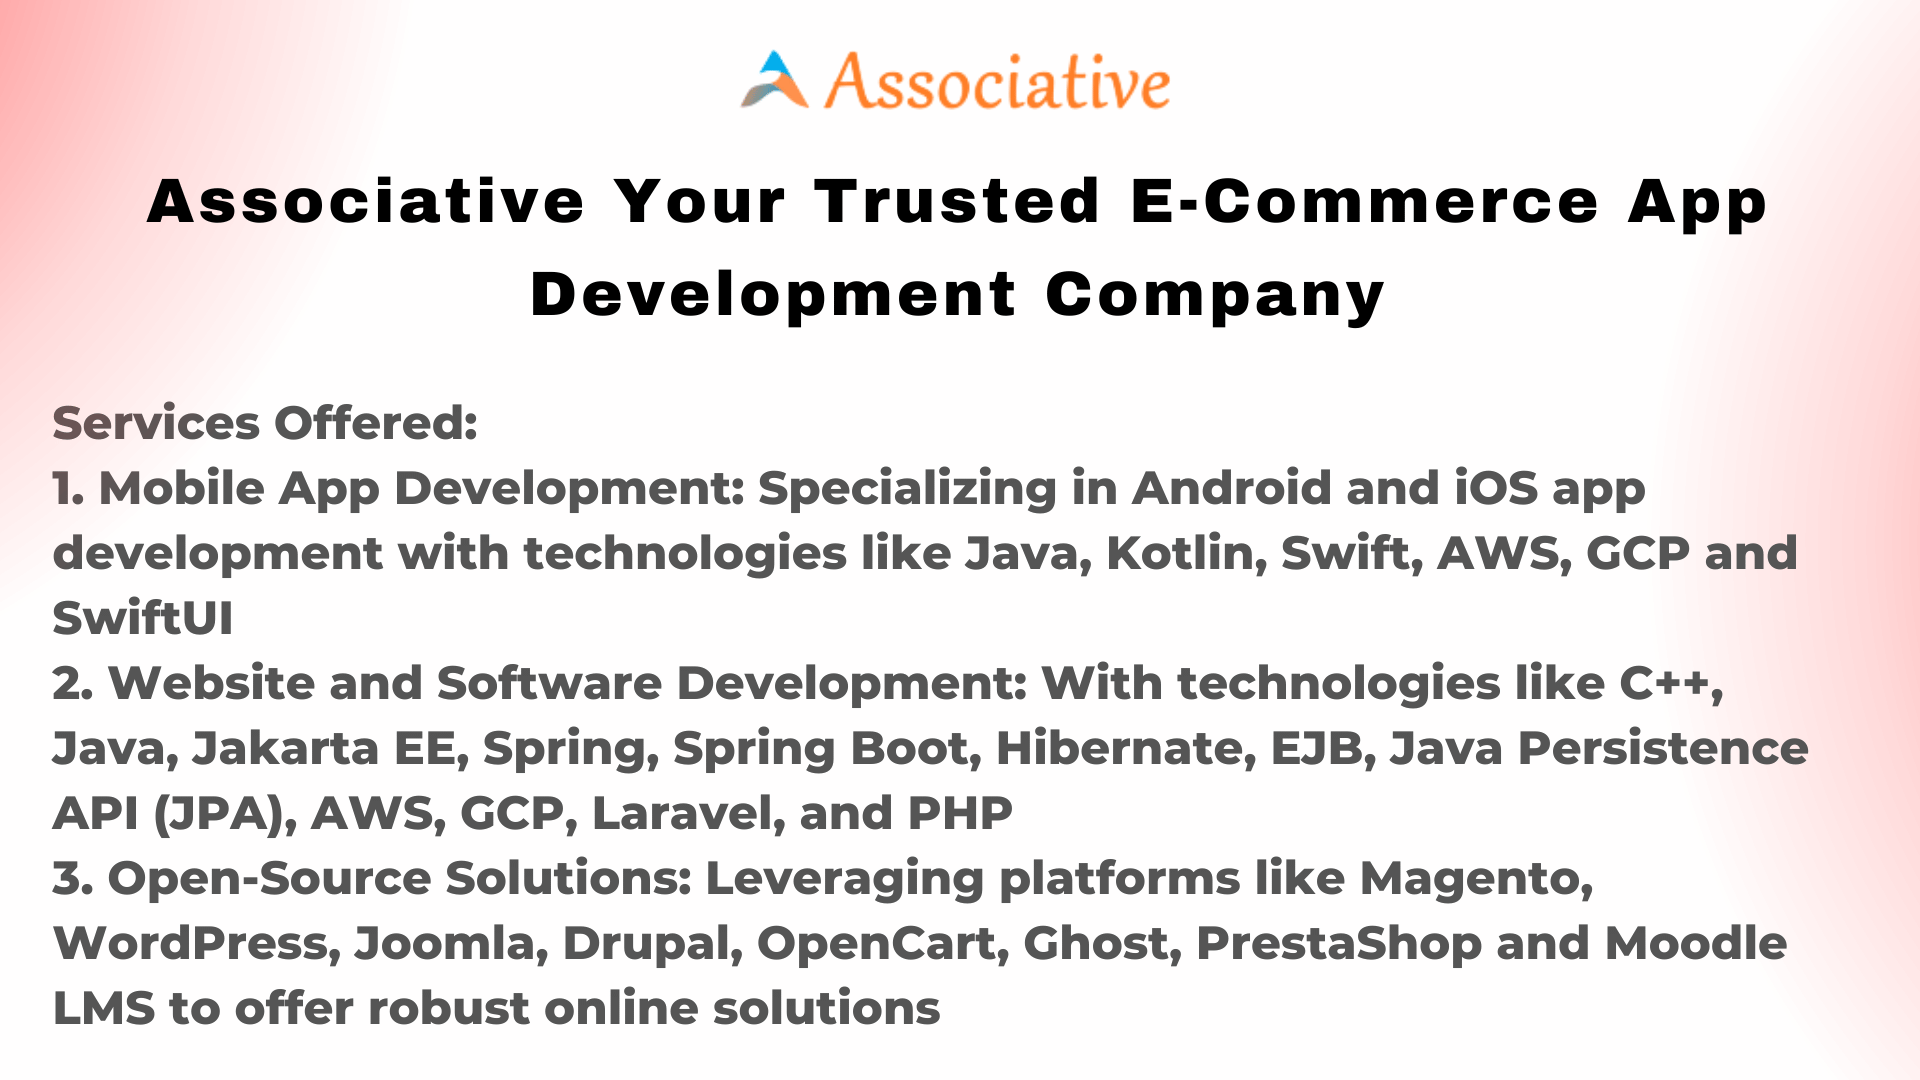 Associative Your Trusted E-Commerce App Development Company